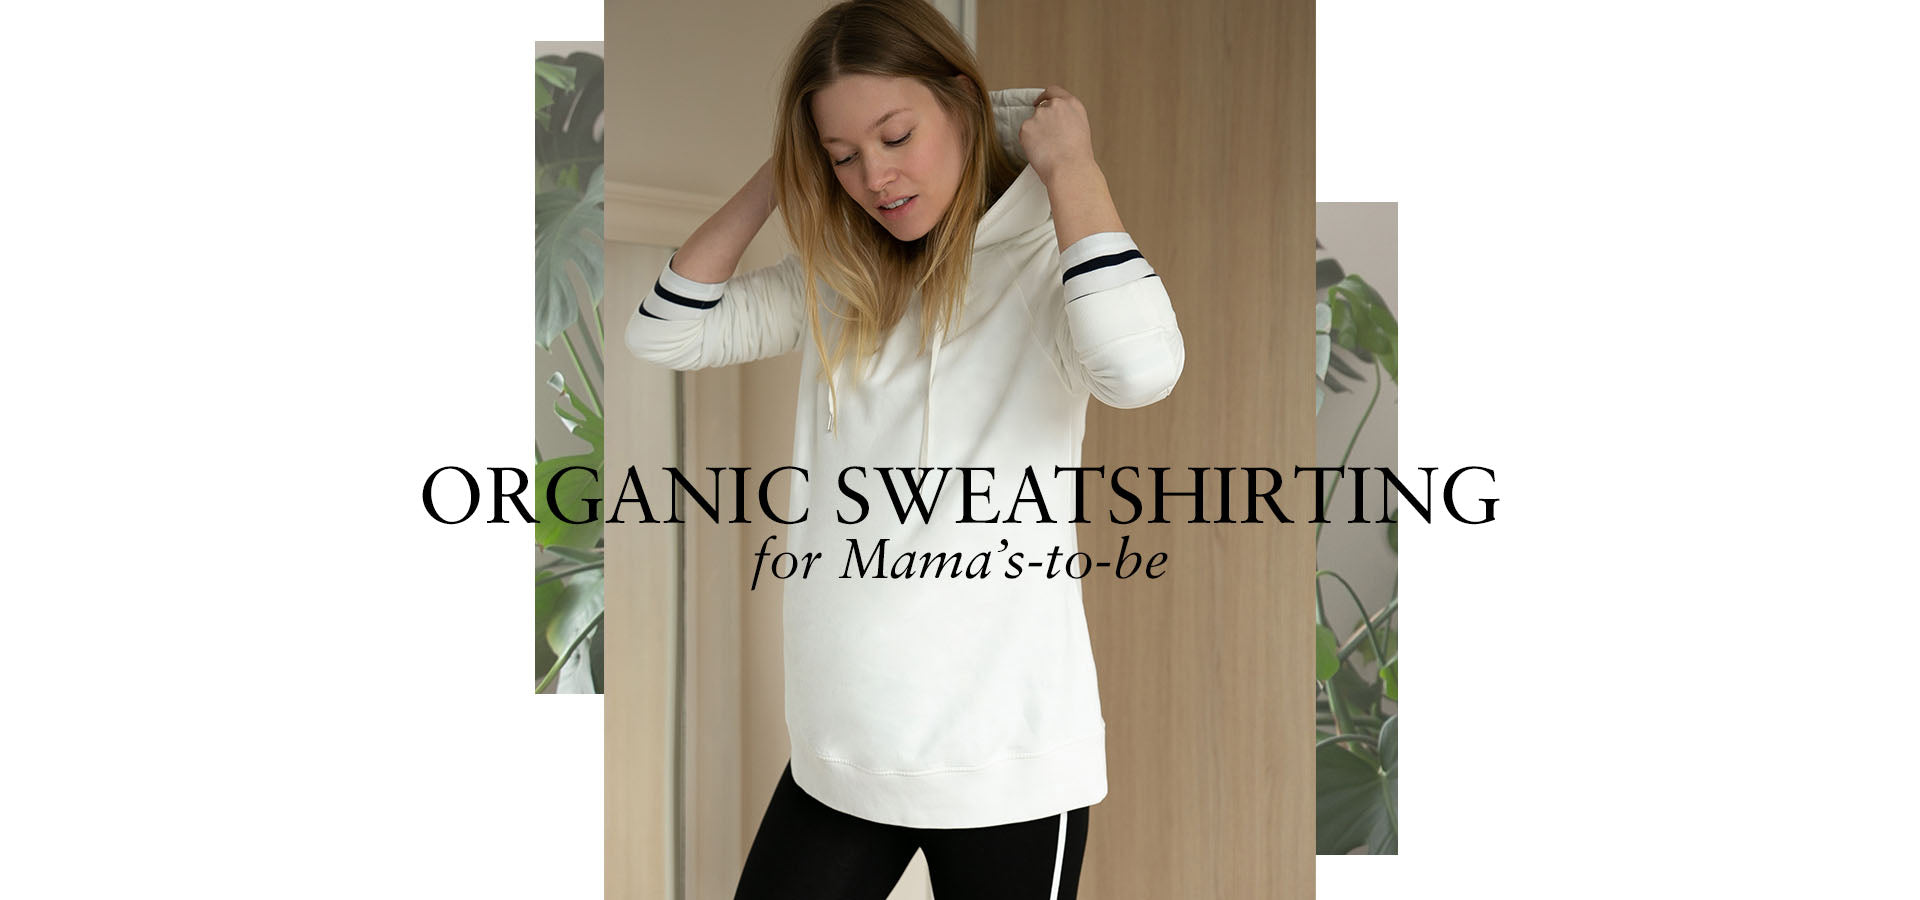 Organic Sweatshirting for Mama's-to-be